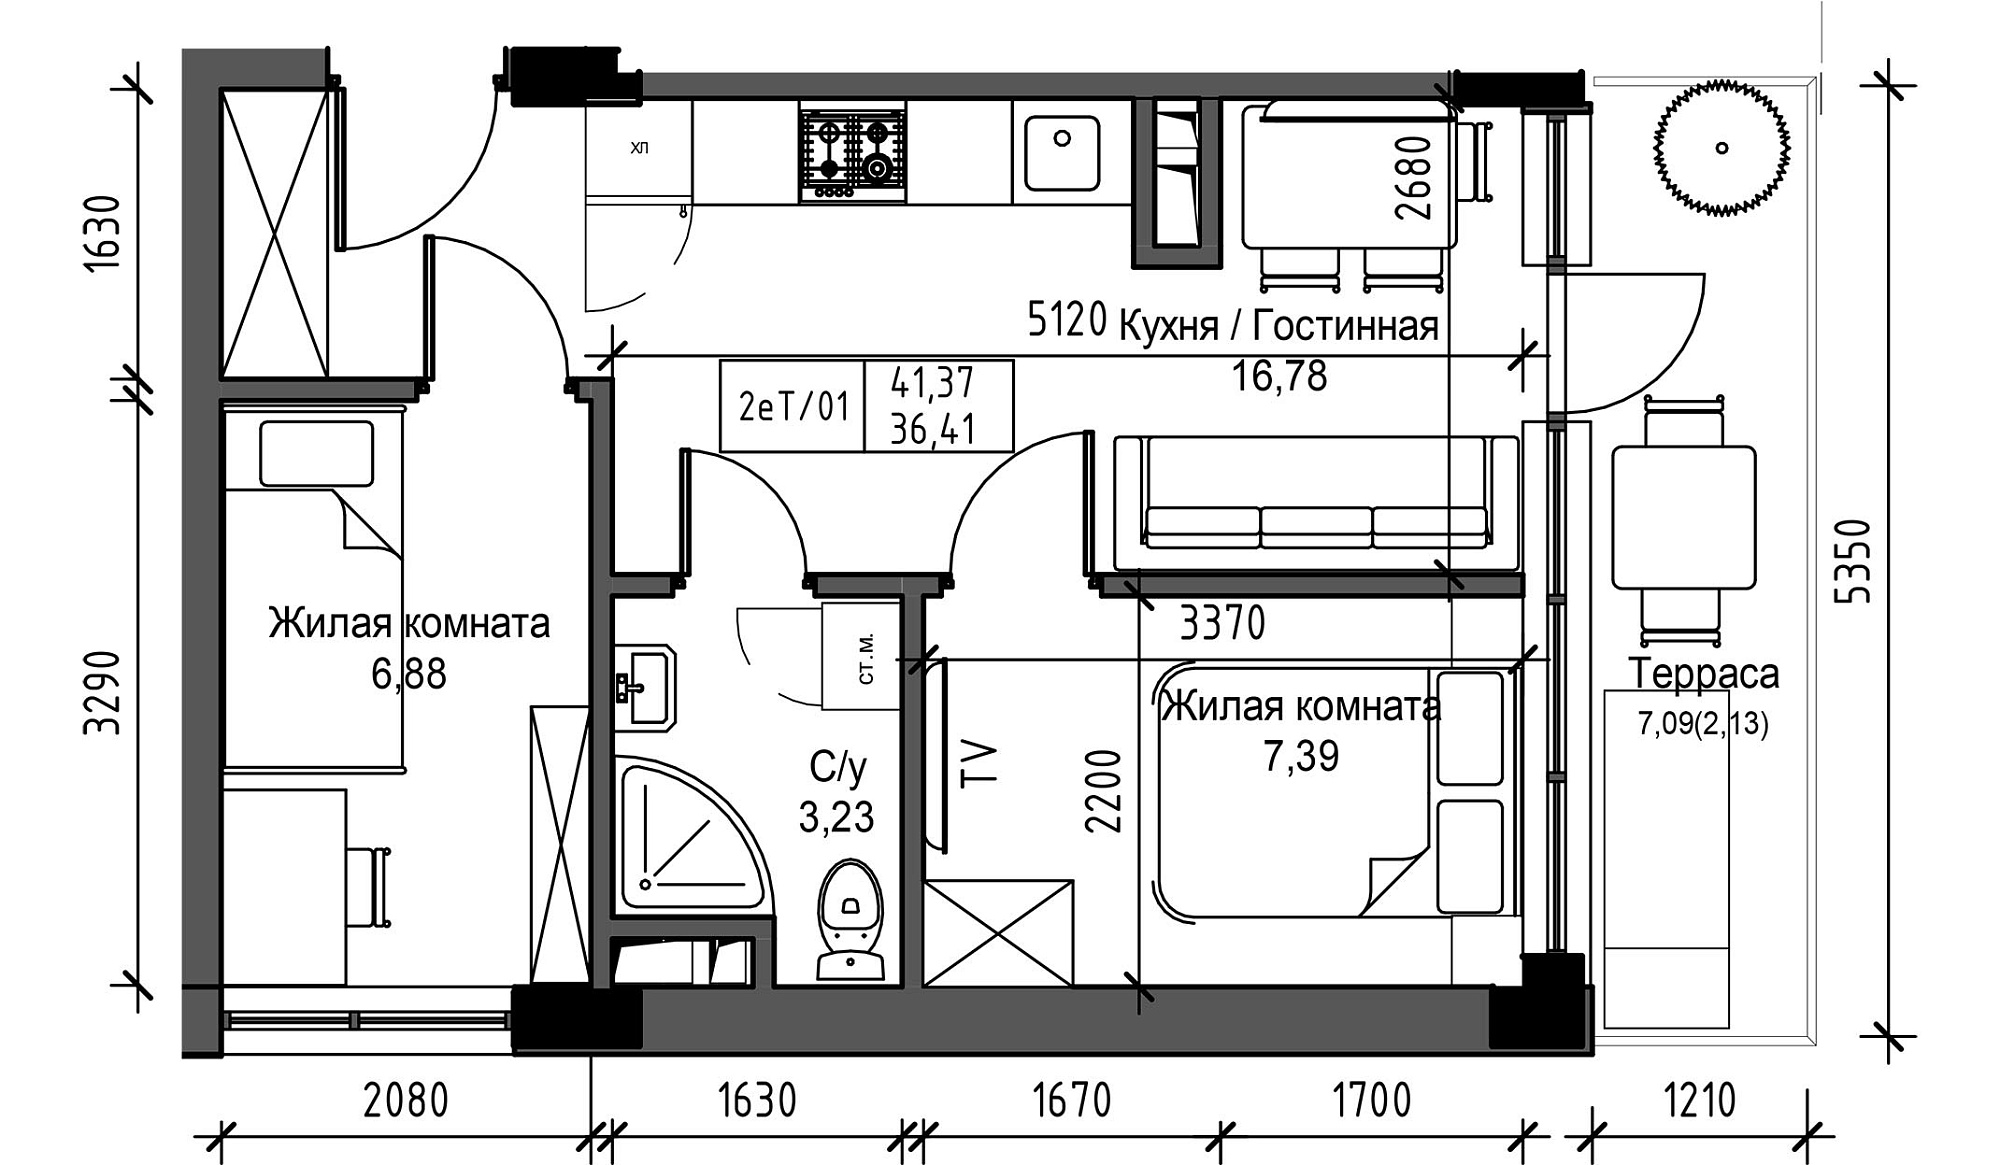 Планування 2-к квартира площею 36.41м2, UM-003-06/0057.